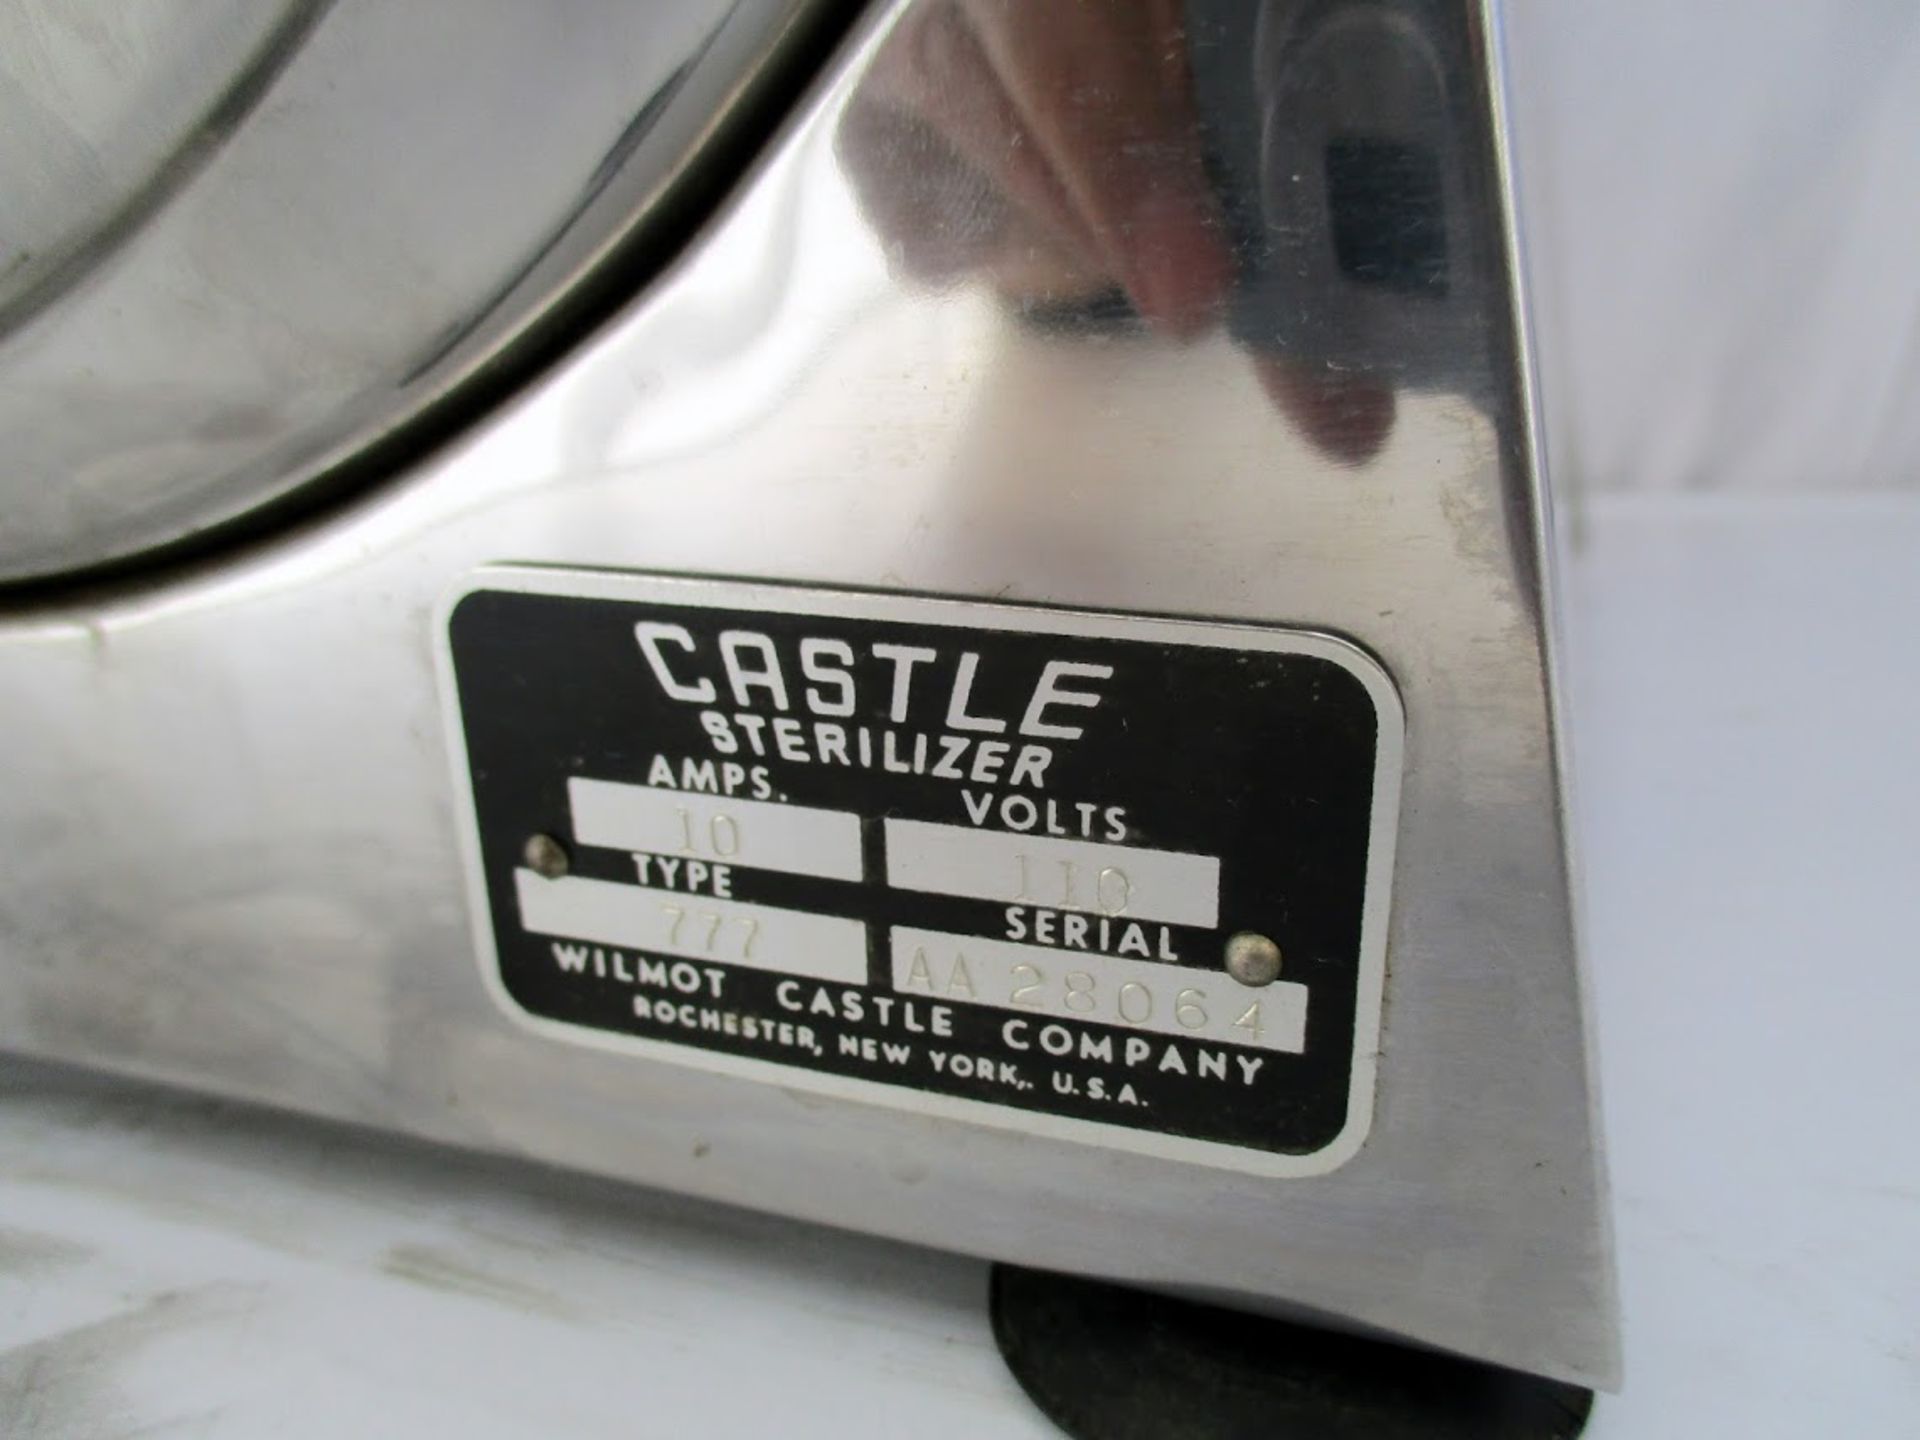 Castle Model 777 Autoclave Sterilizer.110V 10 amps. - Image 2 of 4